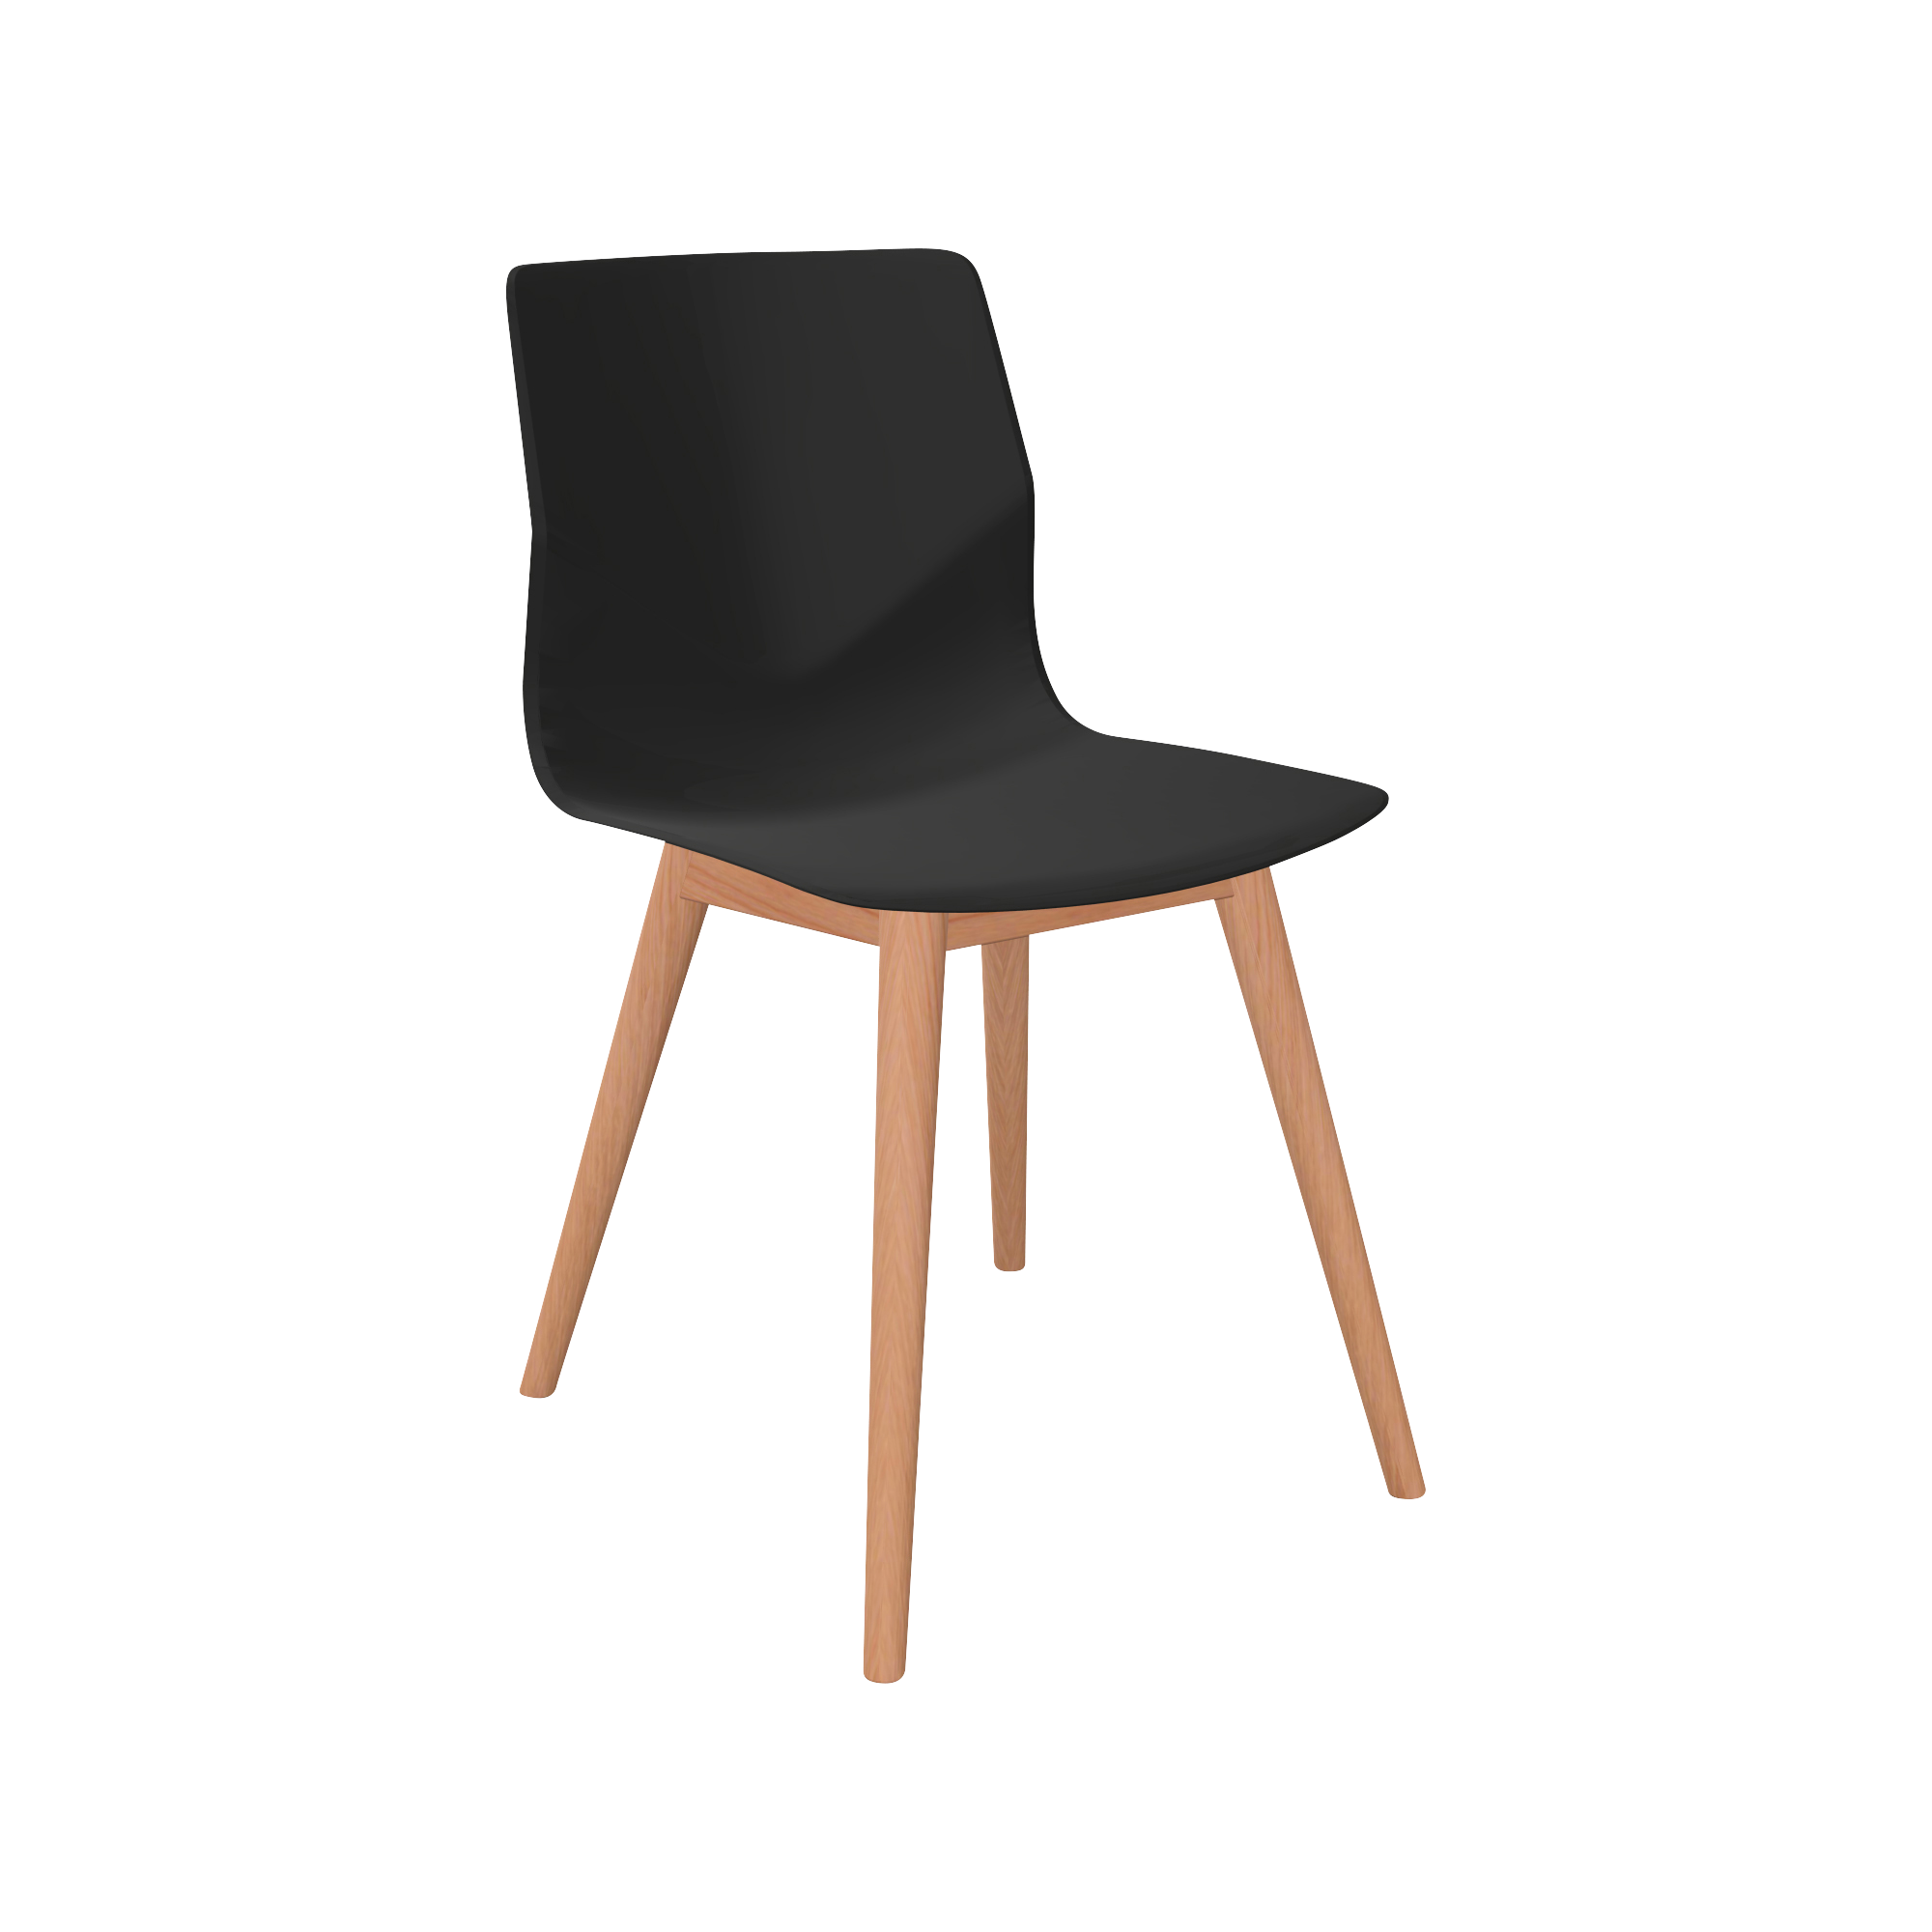 A black designer desk chair with wooden legs